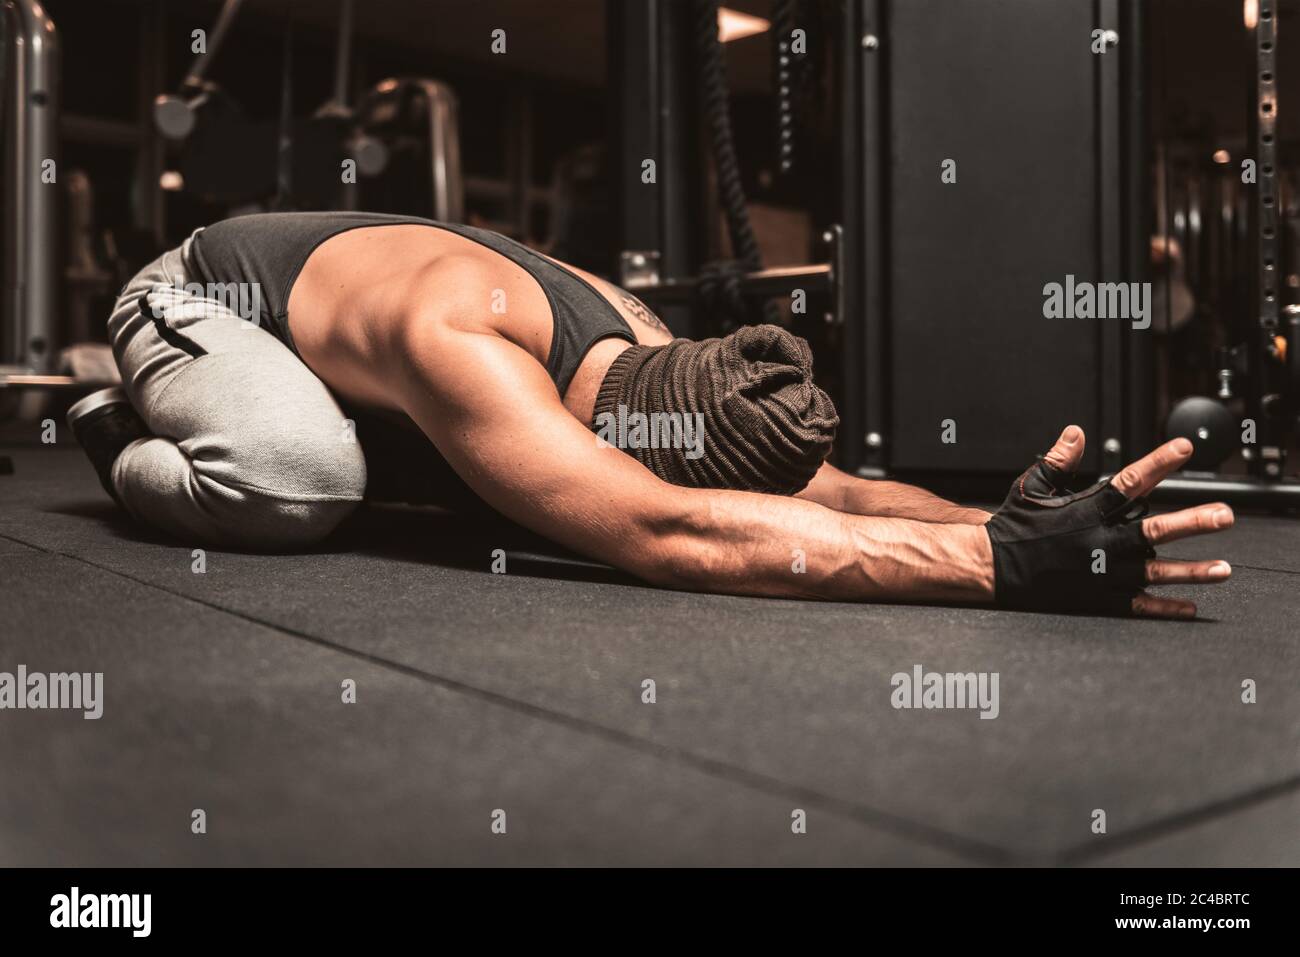 A sporty man in the gym is doing Yoga exercises. Back stretch exercise. Yoga position - Sasangasana. Yoga mental benefits. Stock Photo